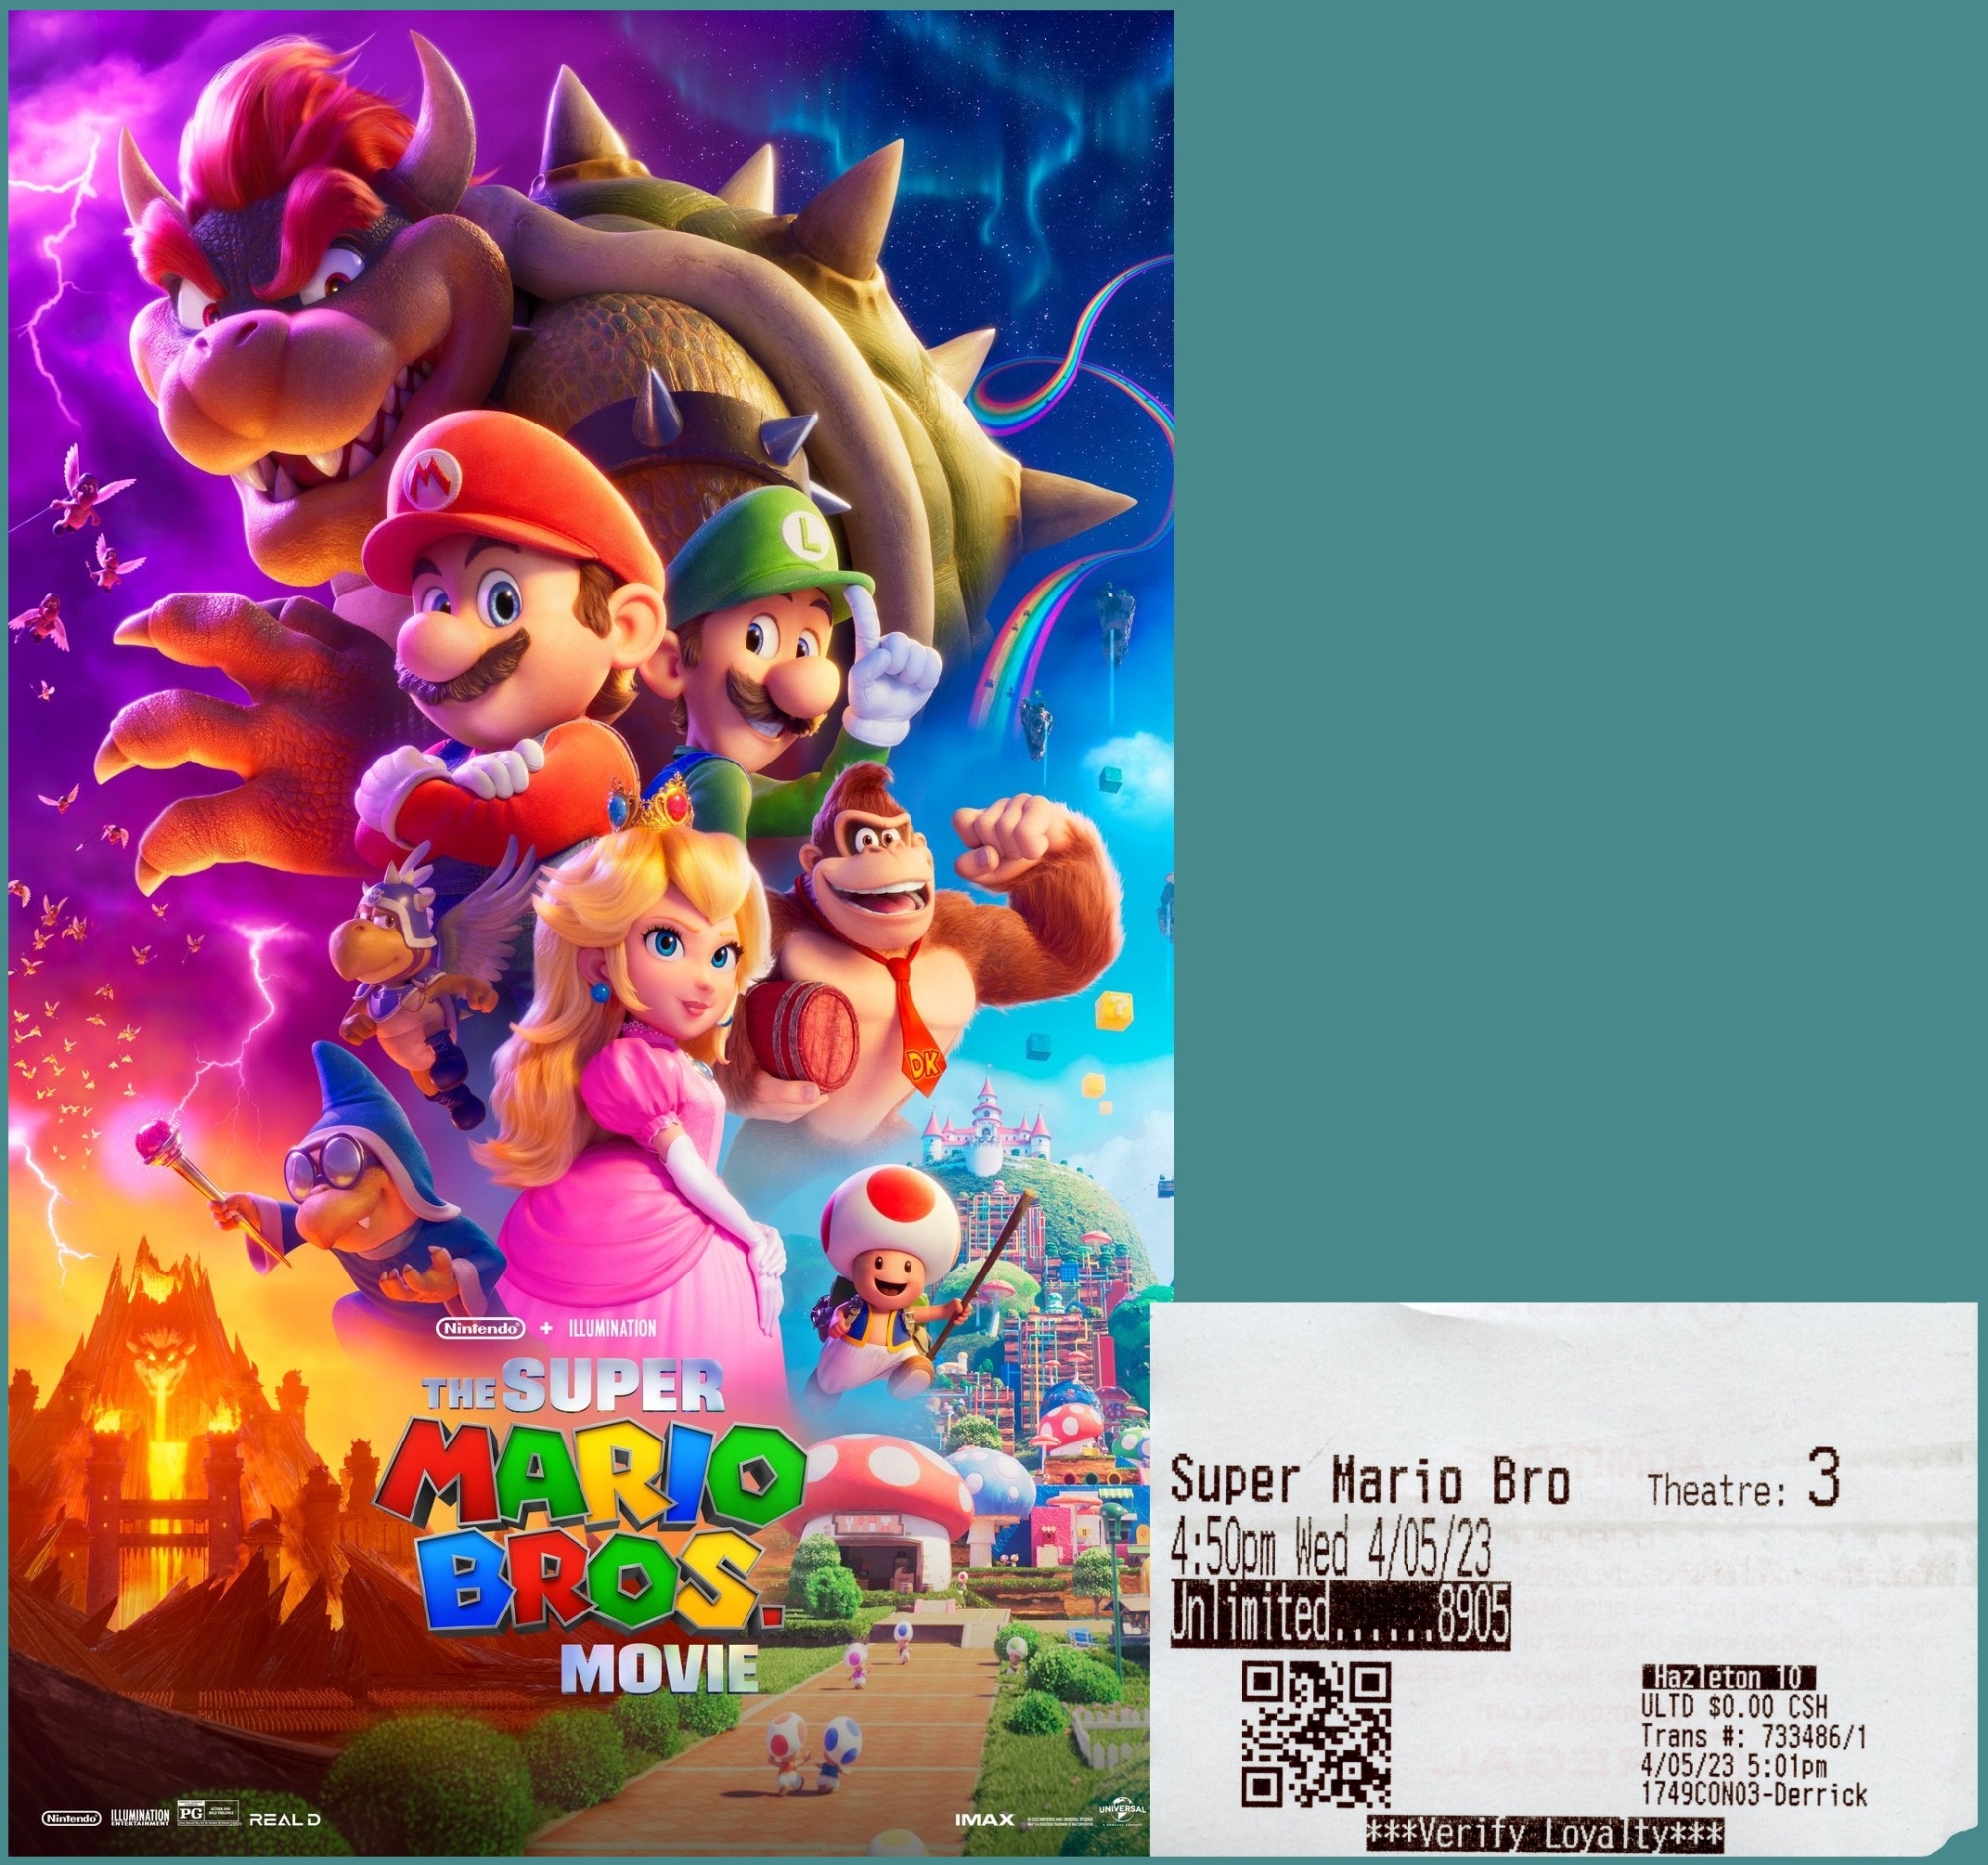 Get Free Mario Movie Ticket By Purchasing Super Mario Games At GameStop -  GameSpot